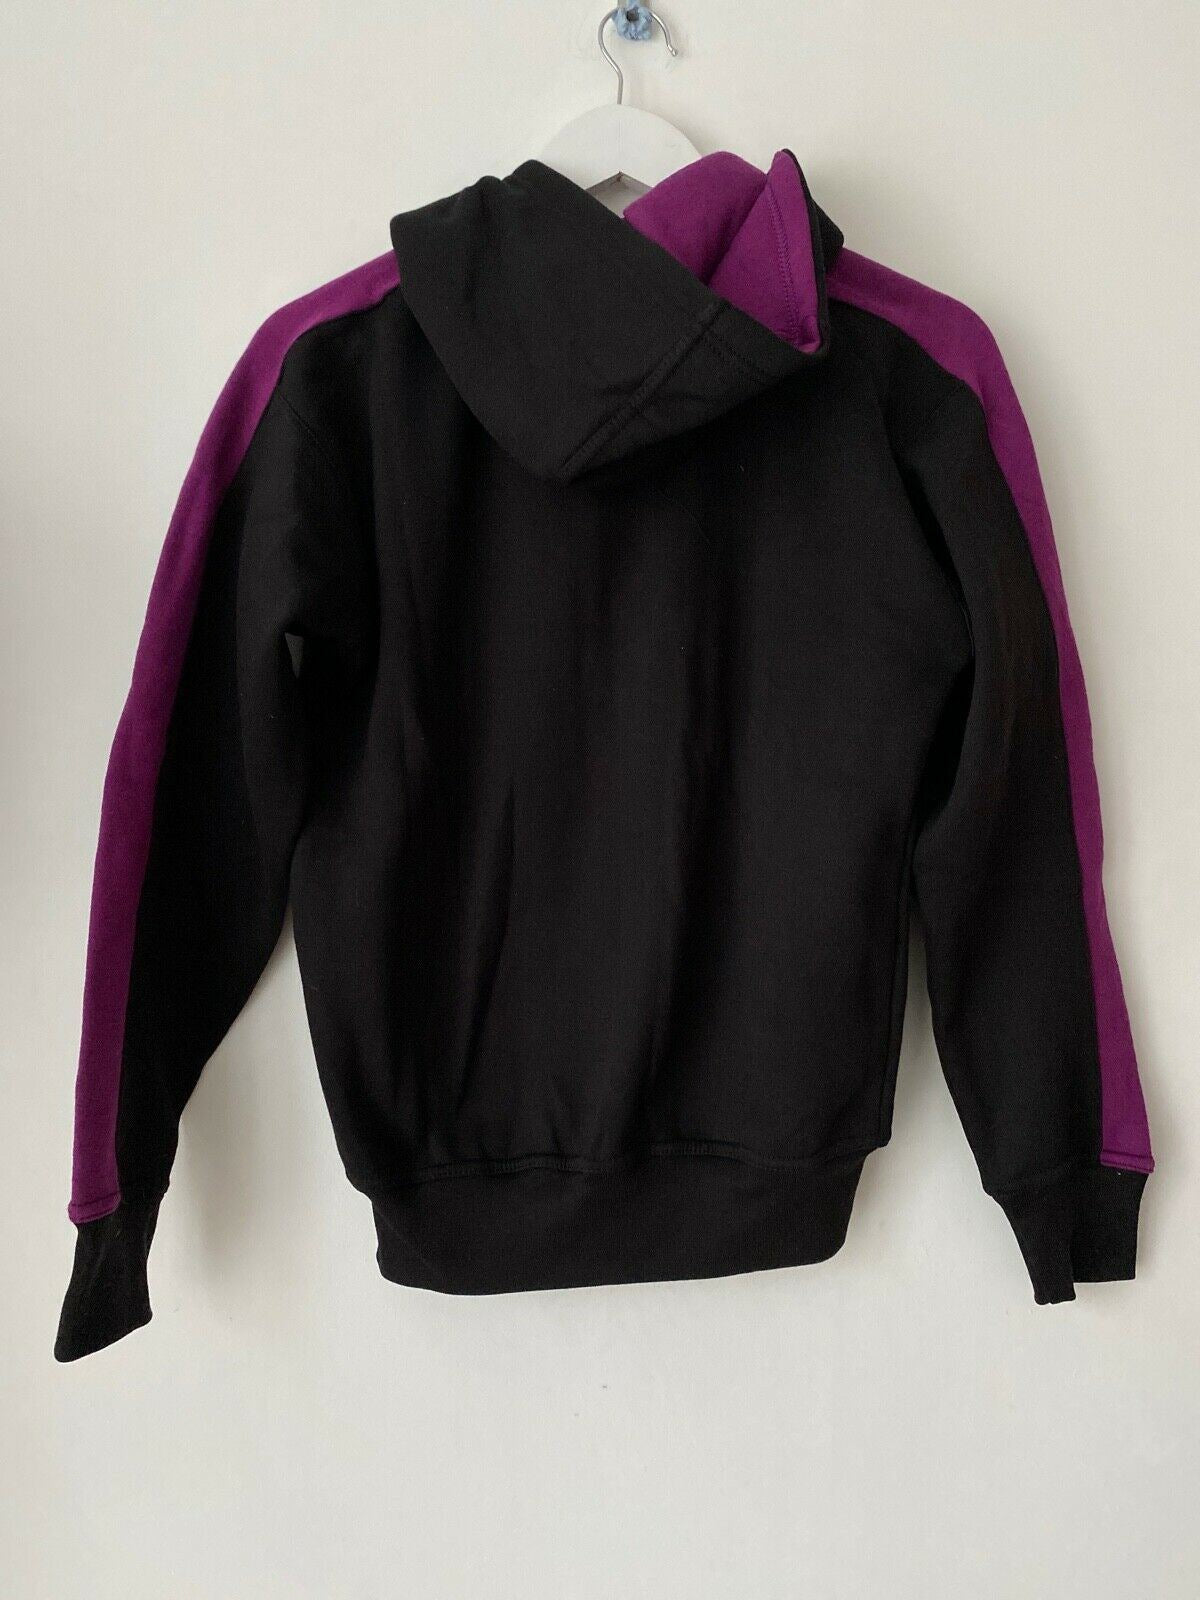 Winterbottoms Girls Zipped Hoodie Black / Purple Sizes 9 / 10 & Small School